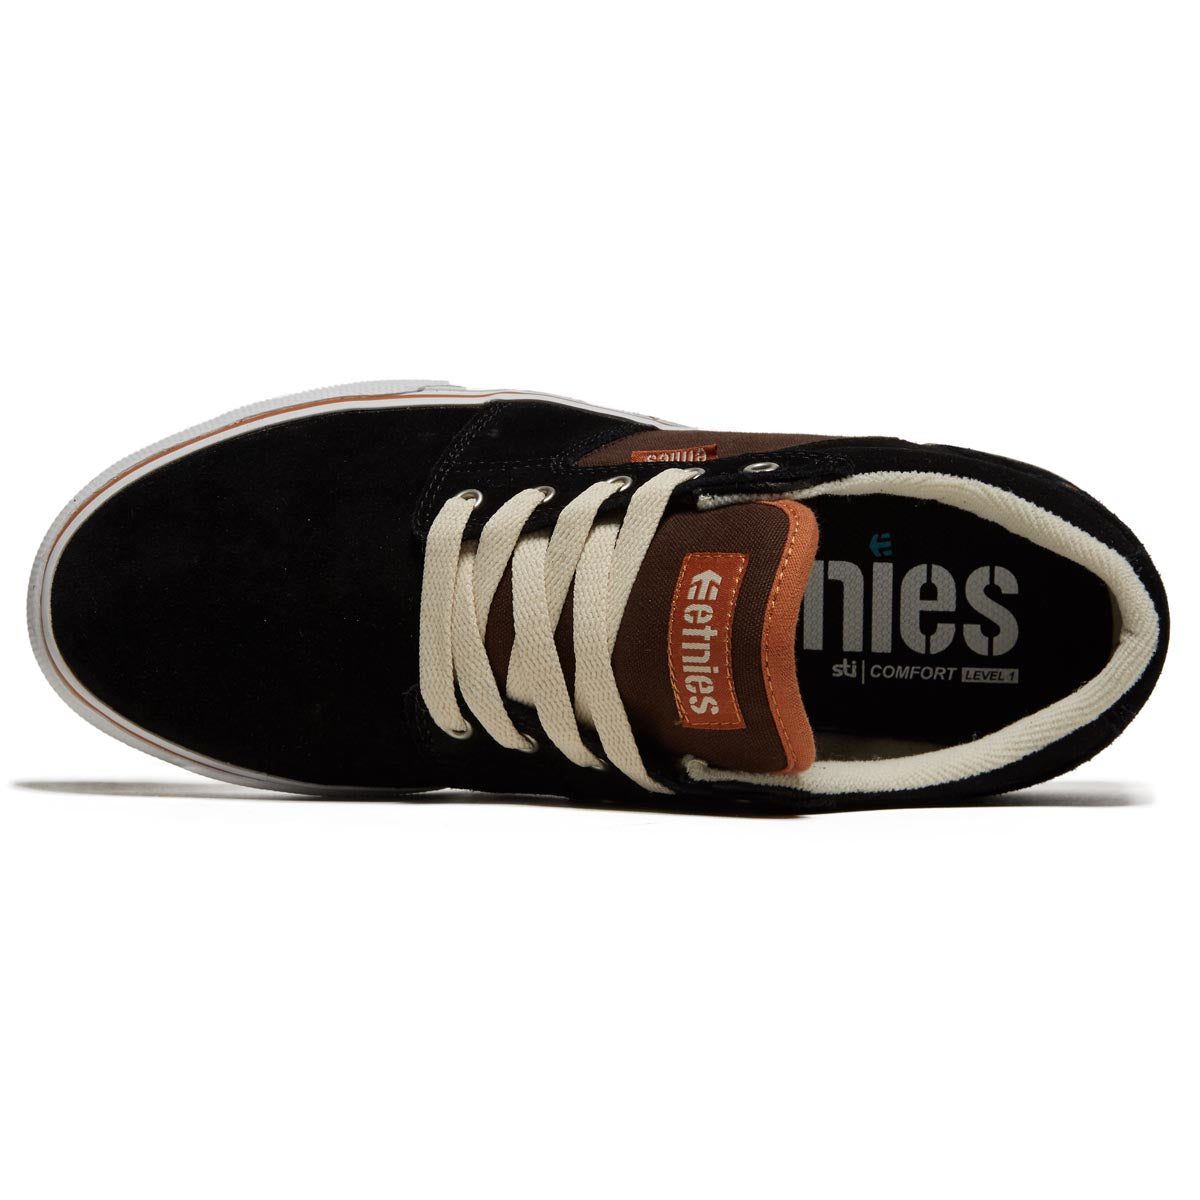 Etnies Barge Ls Shoes - Black/Brown image 3